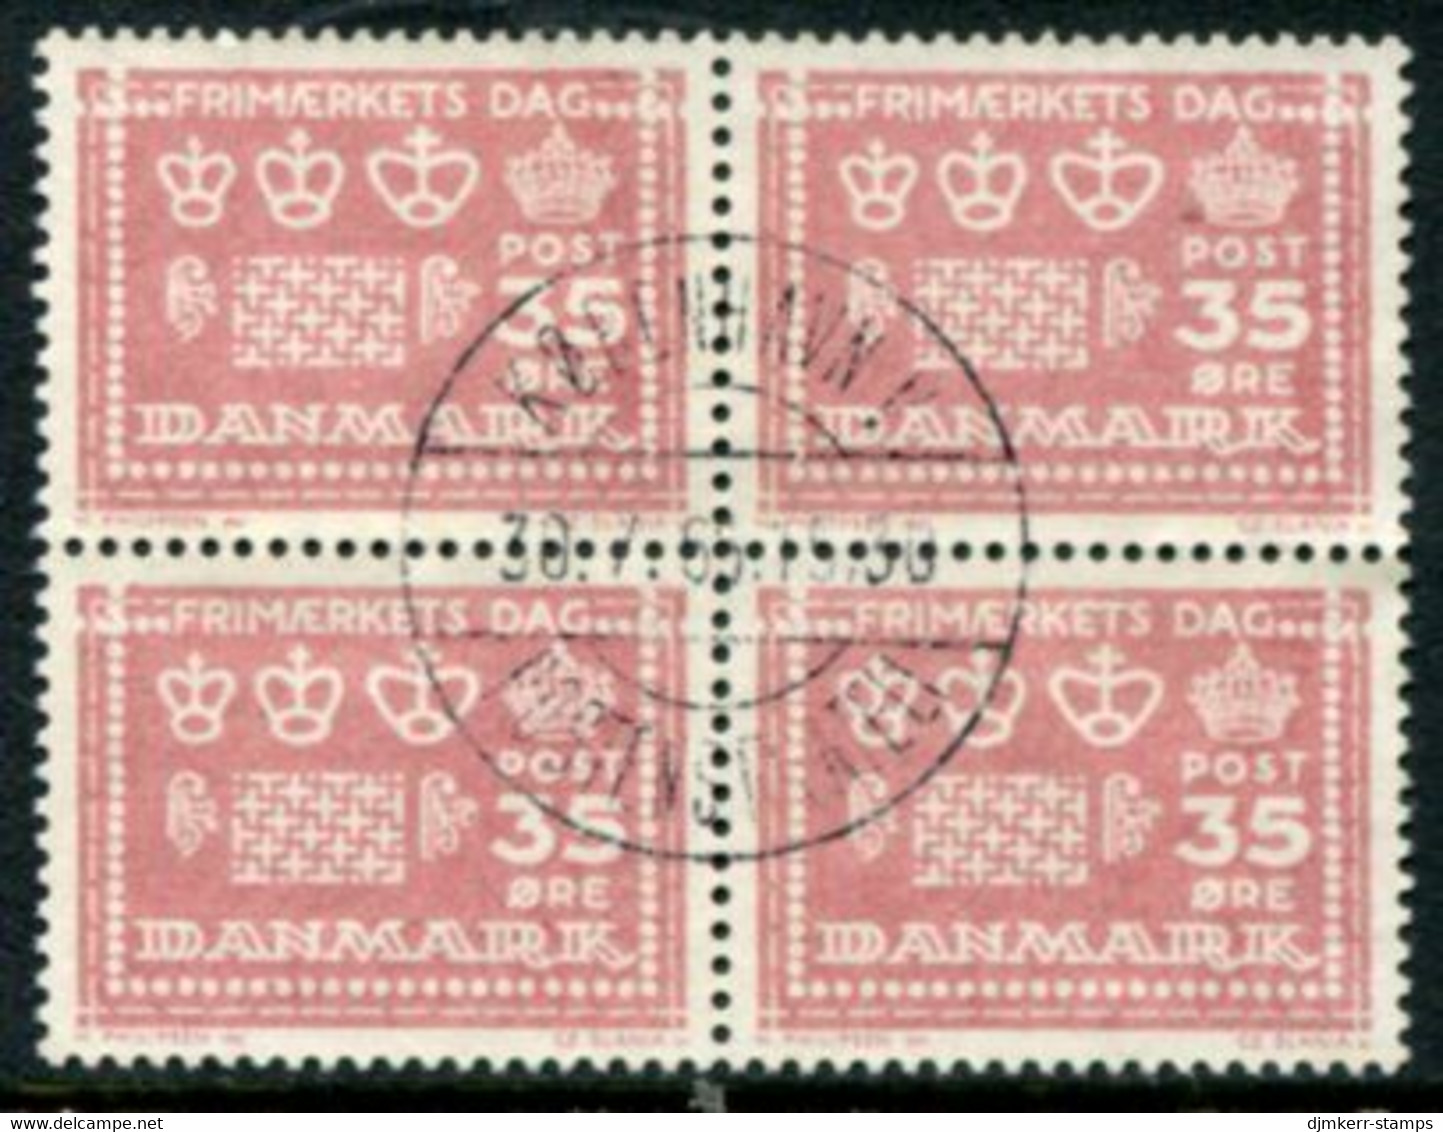 DENMARK 1964 Stamp Day Block Of 4 Used   Michel 425y - Gebruikt